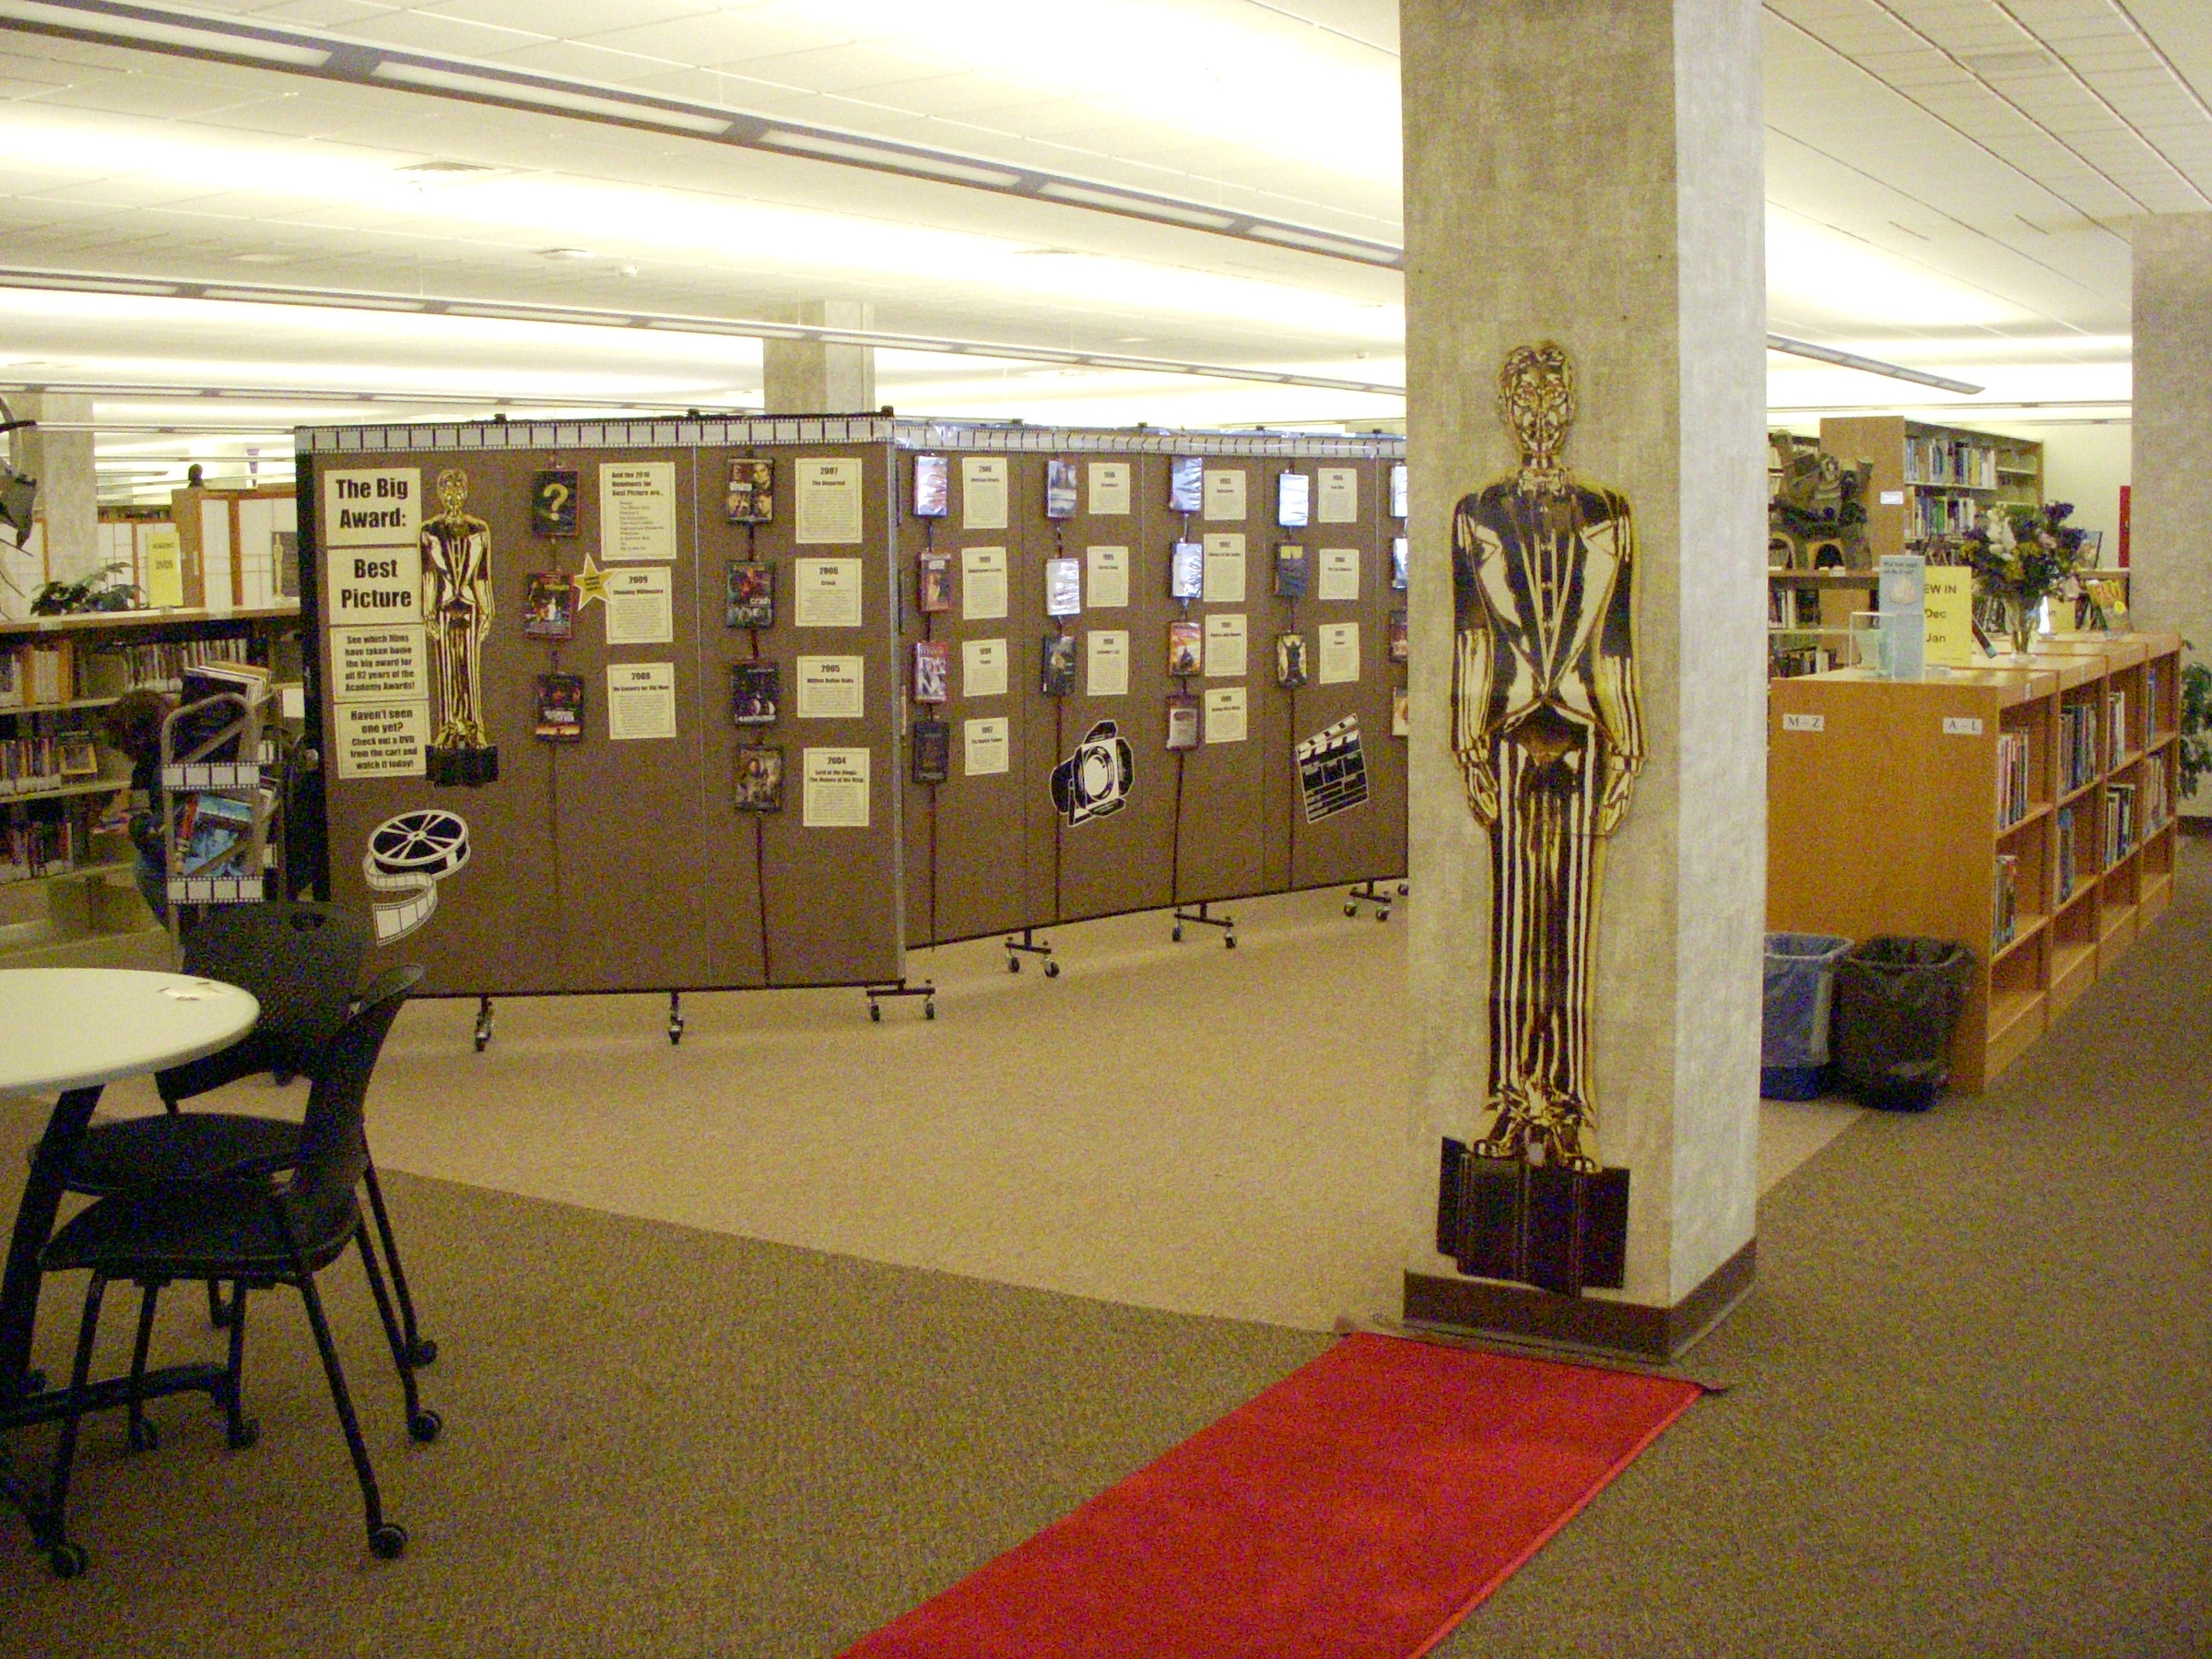 School library display Oscars trivia